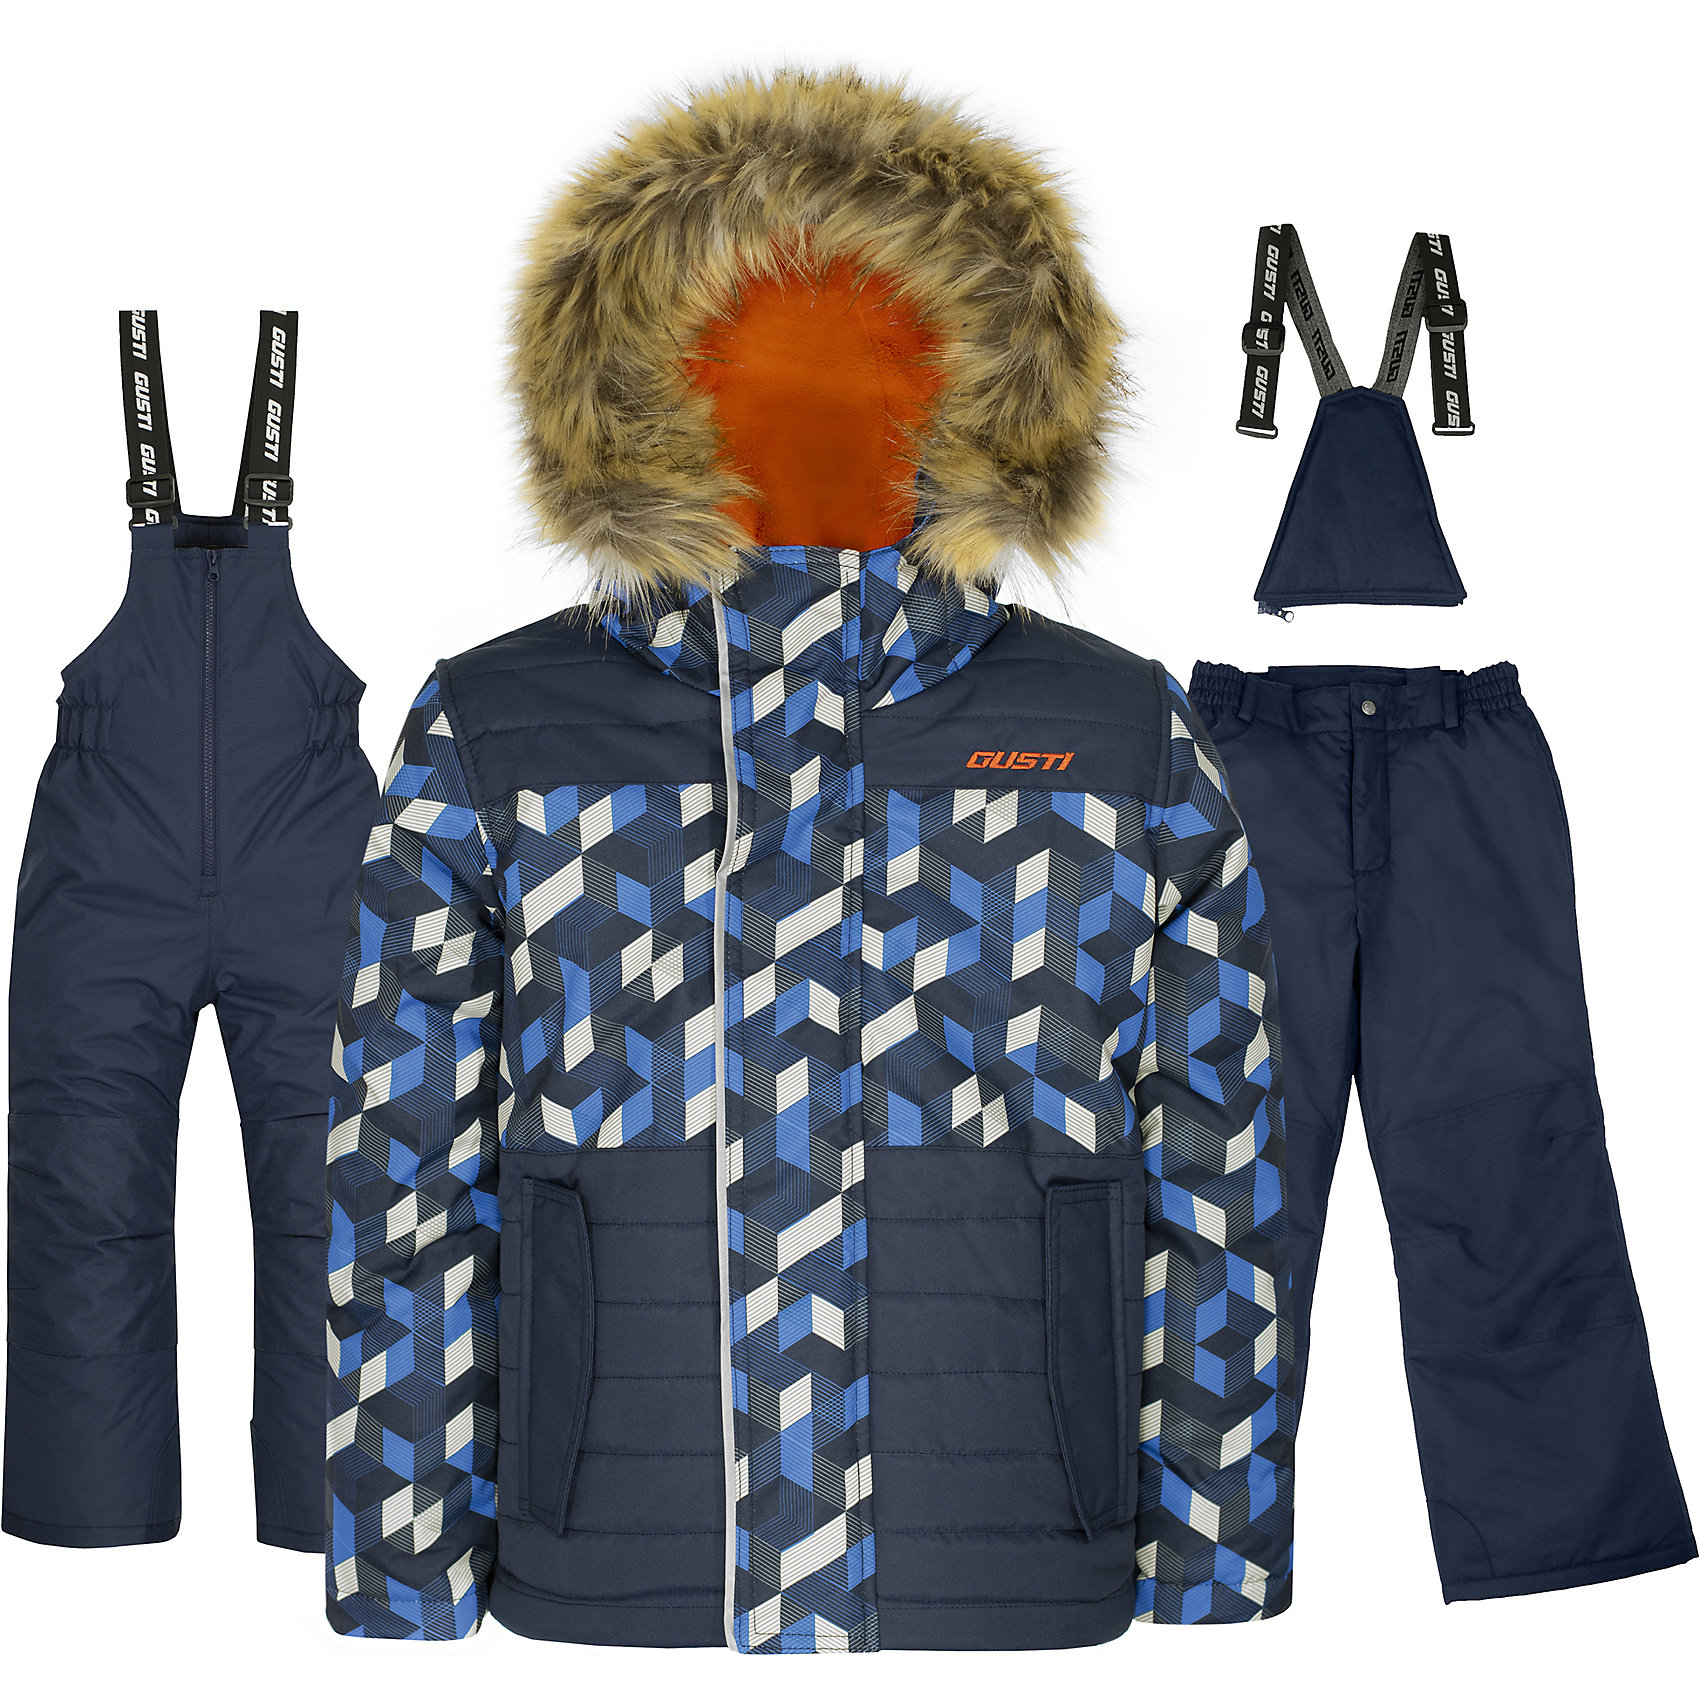 Комплект : куртка и полукомбинезон Gusti 12501363